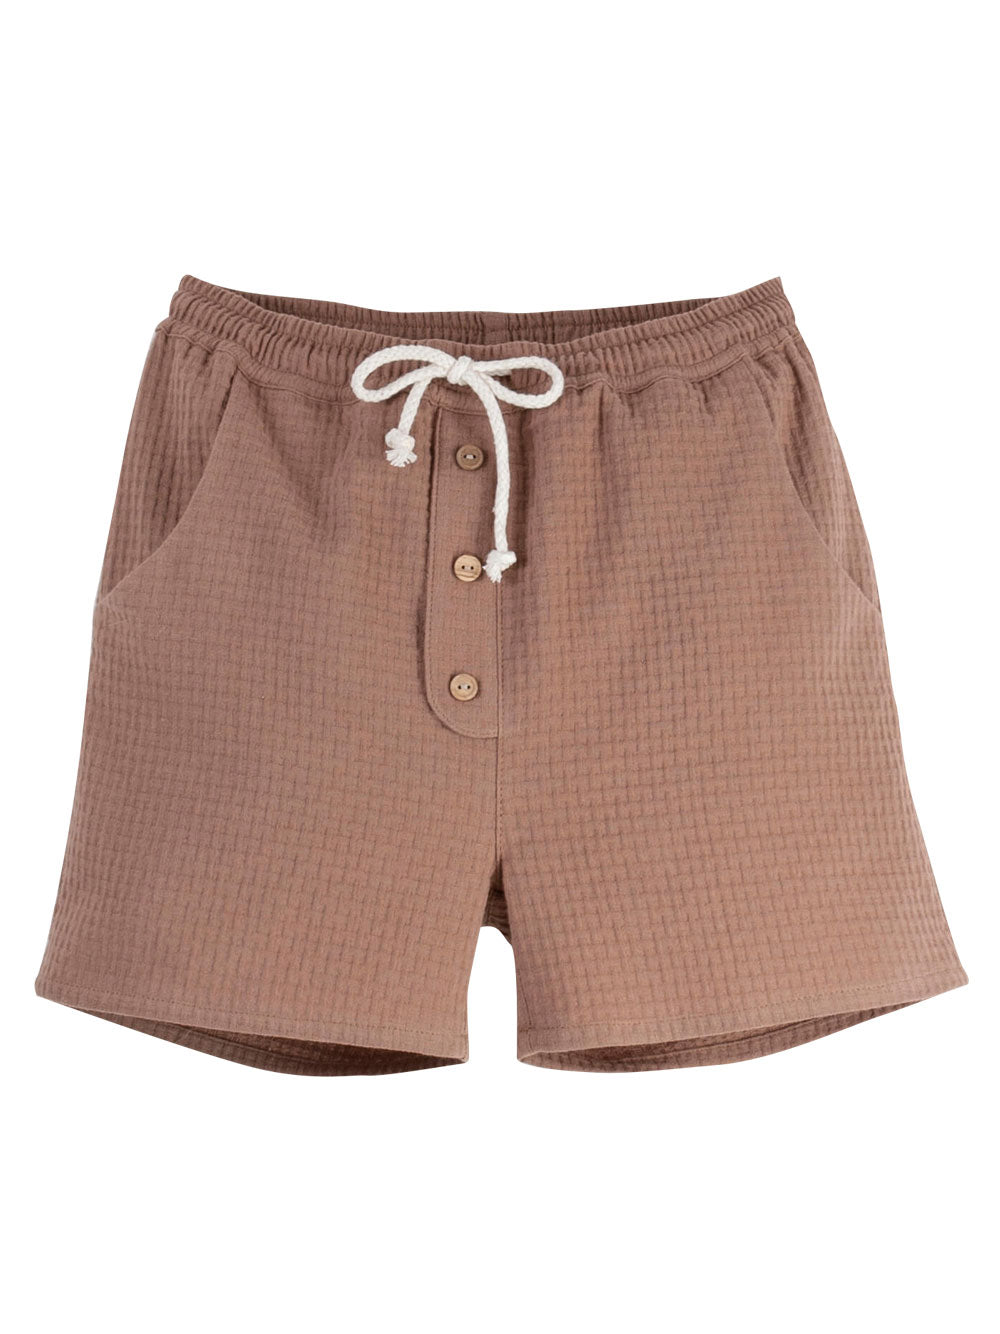 Brown Textured Bermuda Shorts